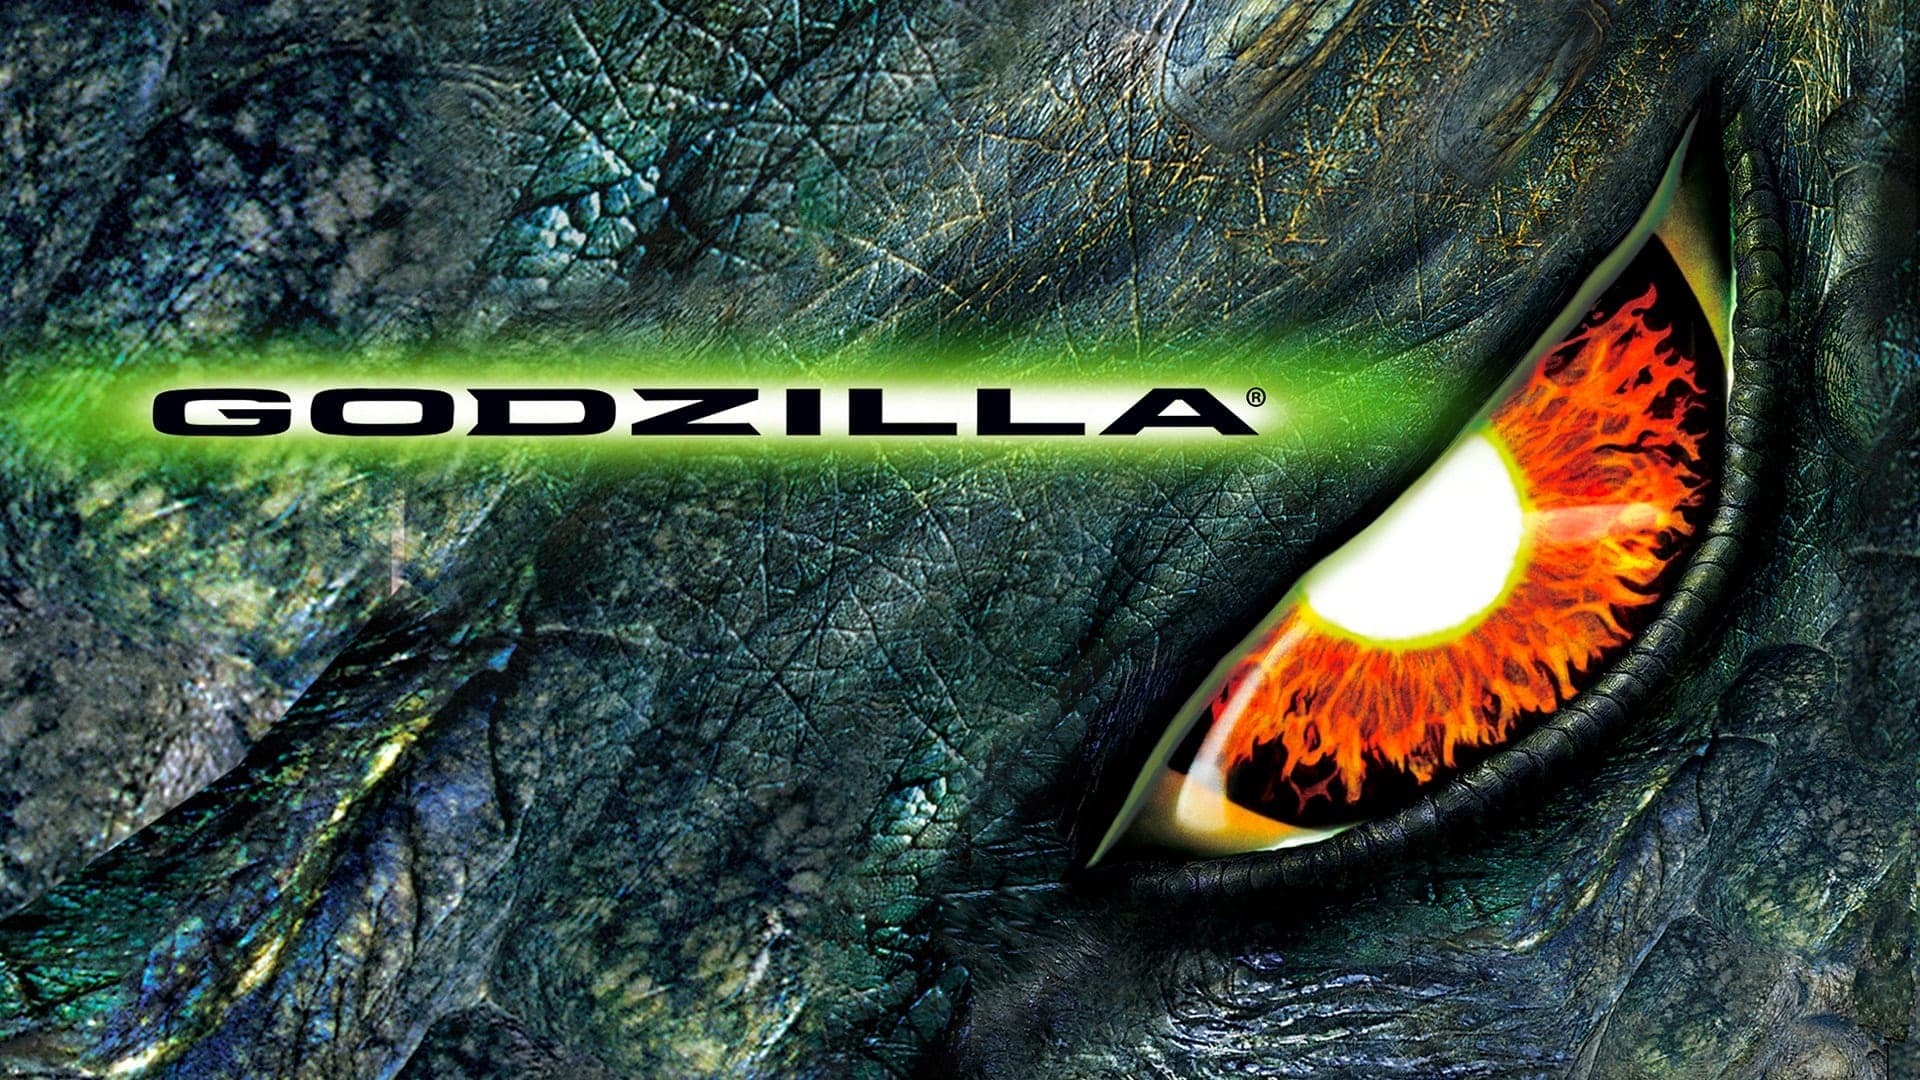 Watch Godzilla (1998) Online | Stream Full Movies